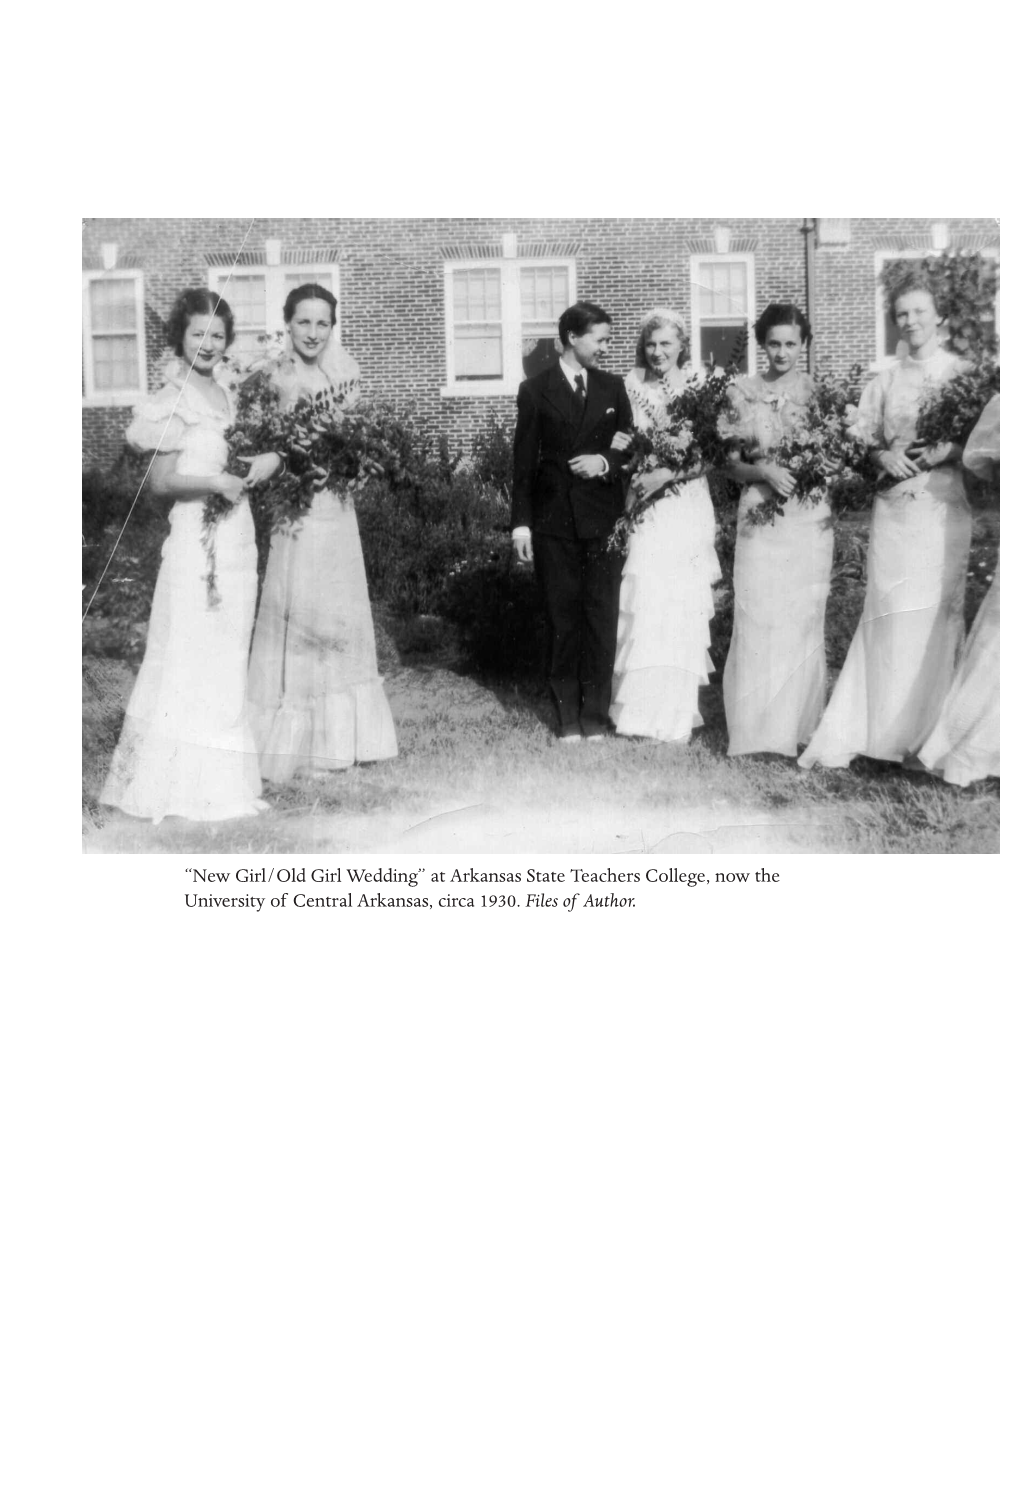 “New Girl/Old Girl Wedding” at Arkansas State Teachers College, Now the University of Central Arkansas, Circa 1930